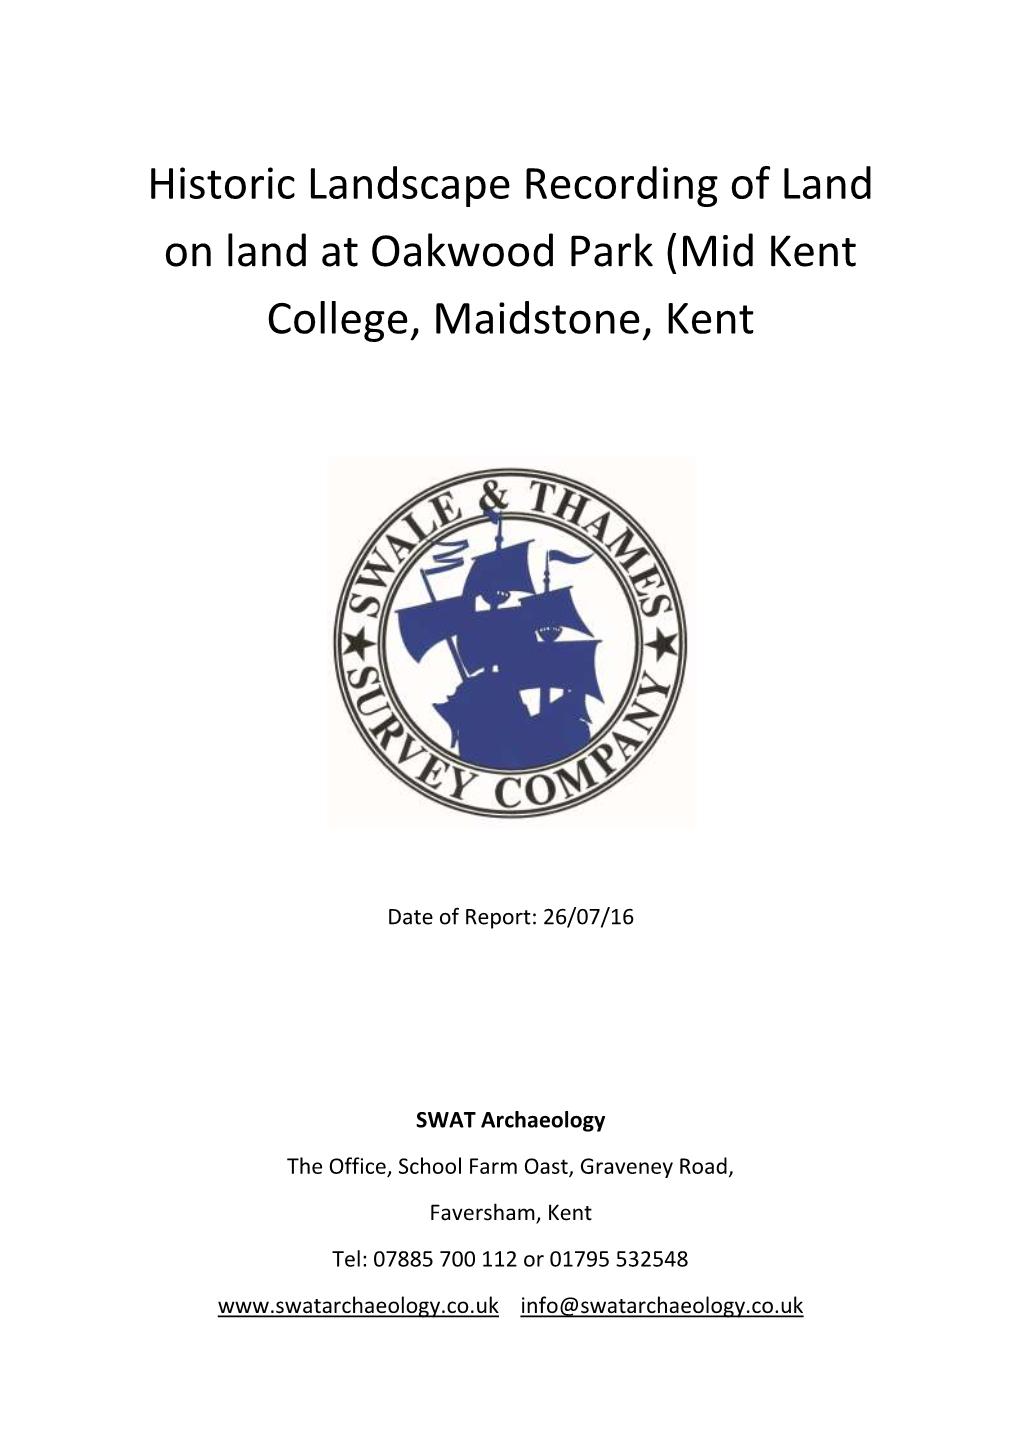 Historic Landscape Recording of Land on Land at Oakwood Park (Mid Kent College, Maidstone, Kent